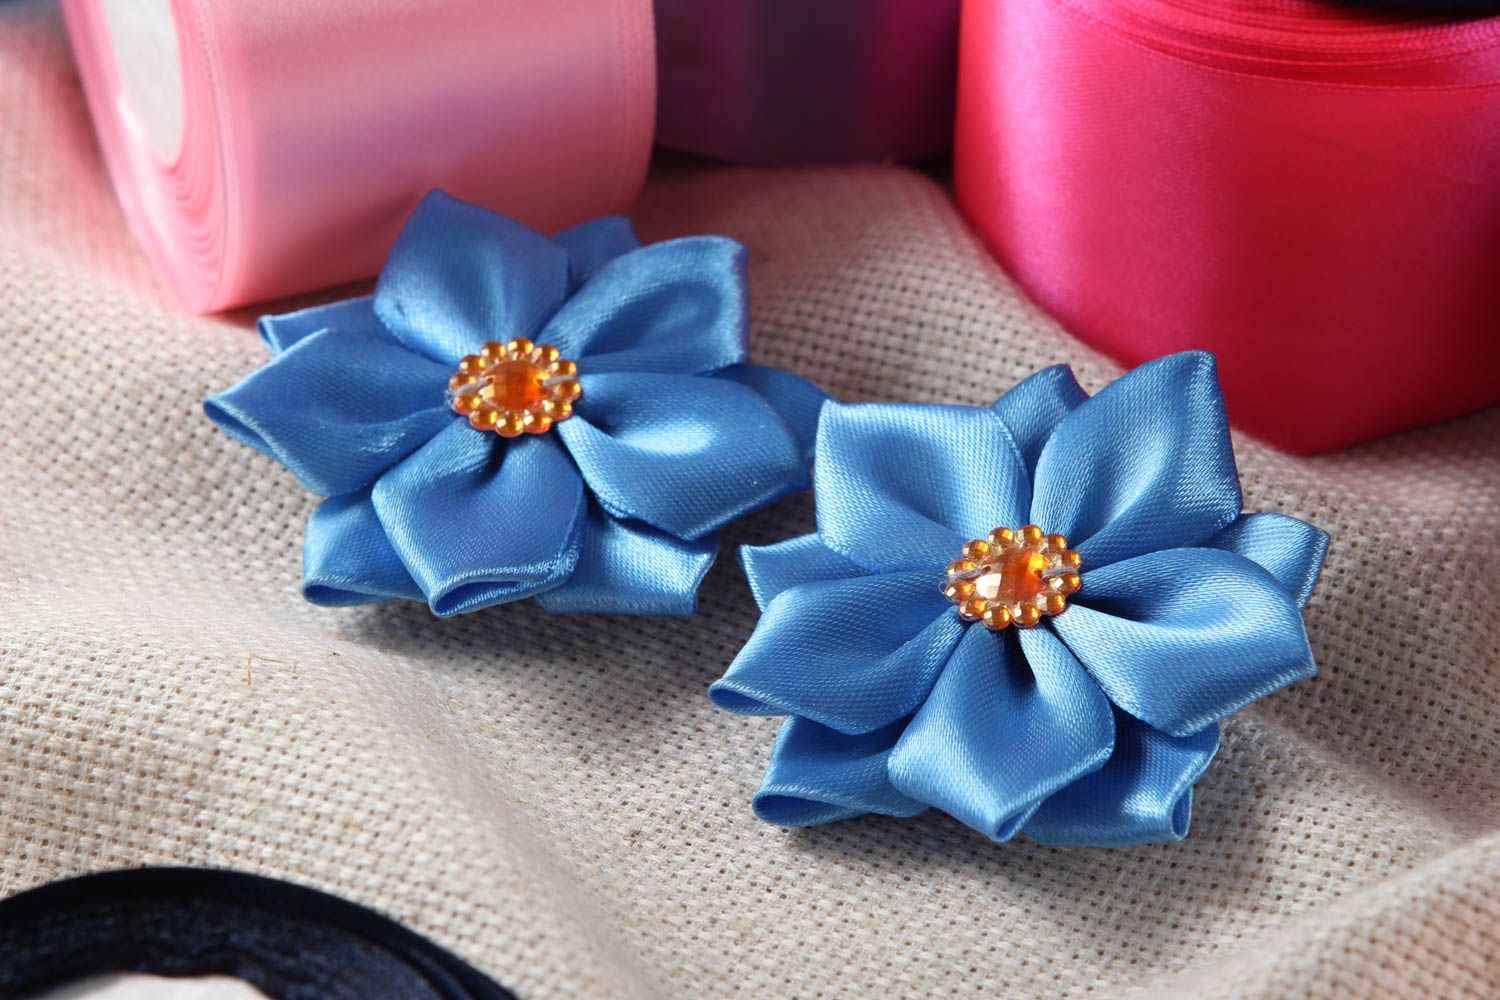 Handmade hair clips kanzashi flowers designer accessories gifts for girls photo 1